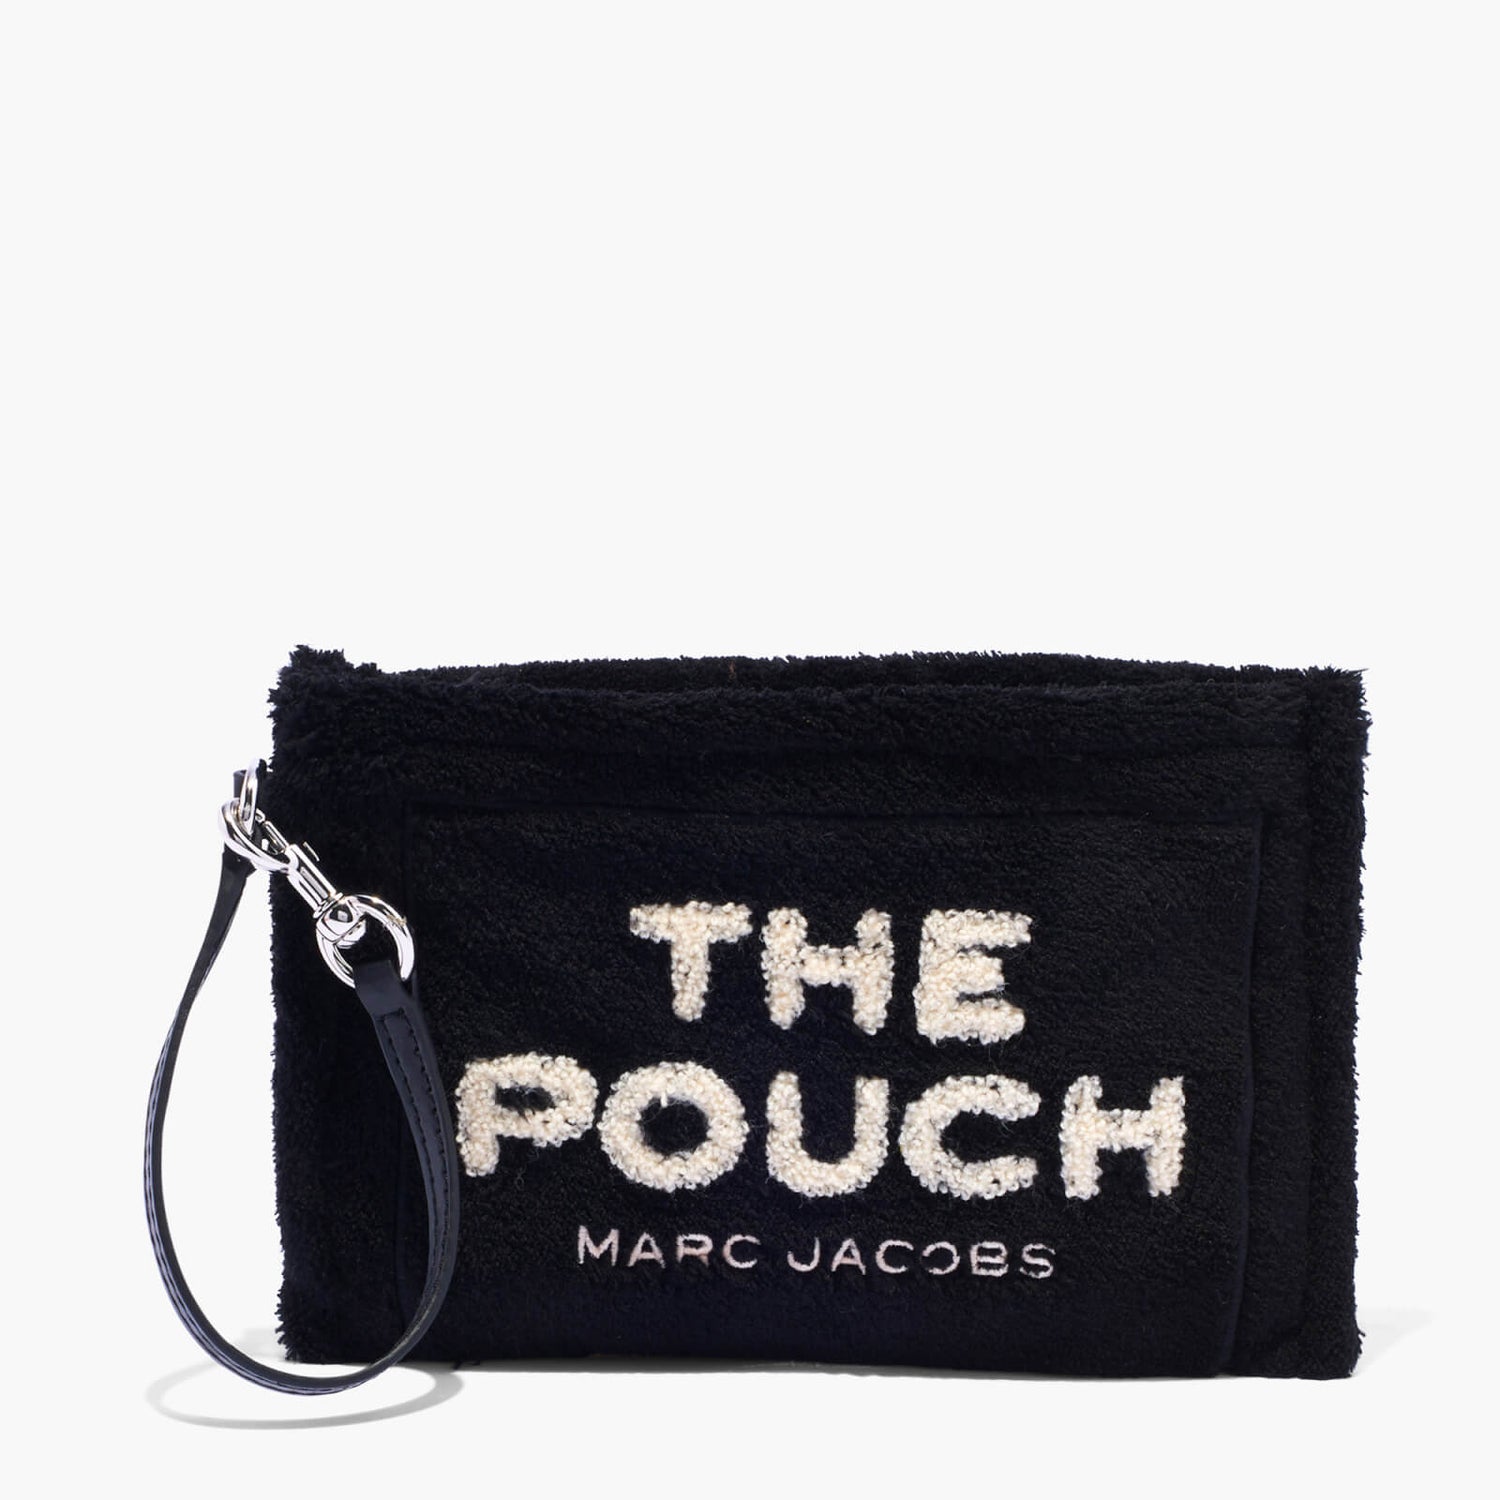 Marc Jacobs Women's Pouch Terry Bag - Black